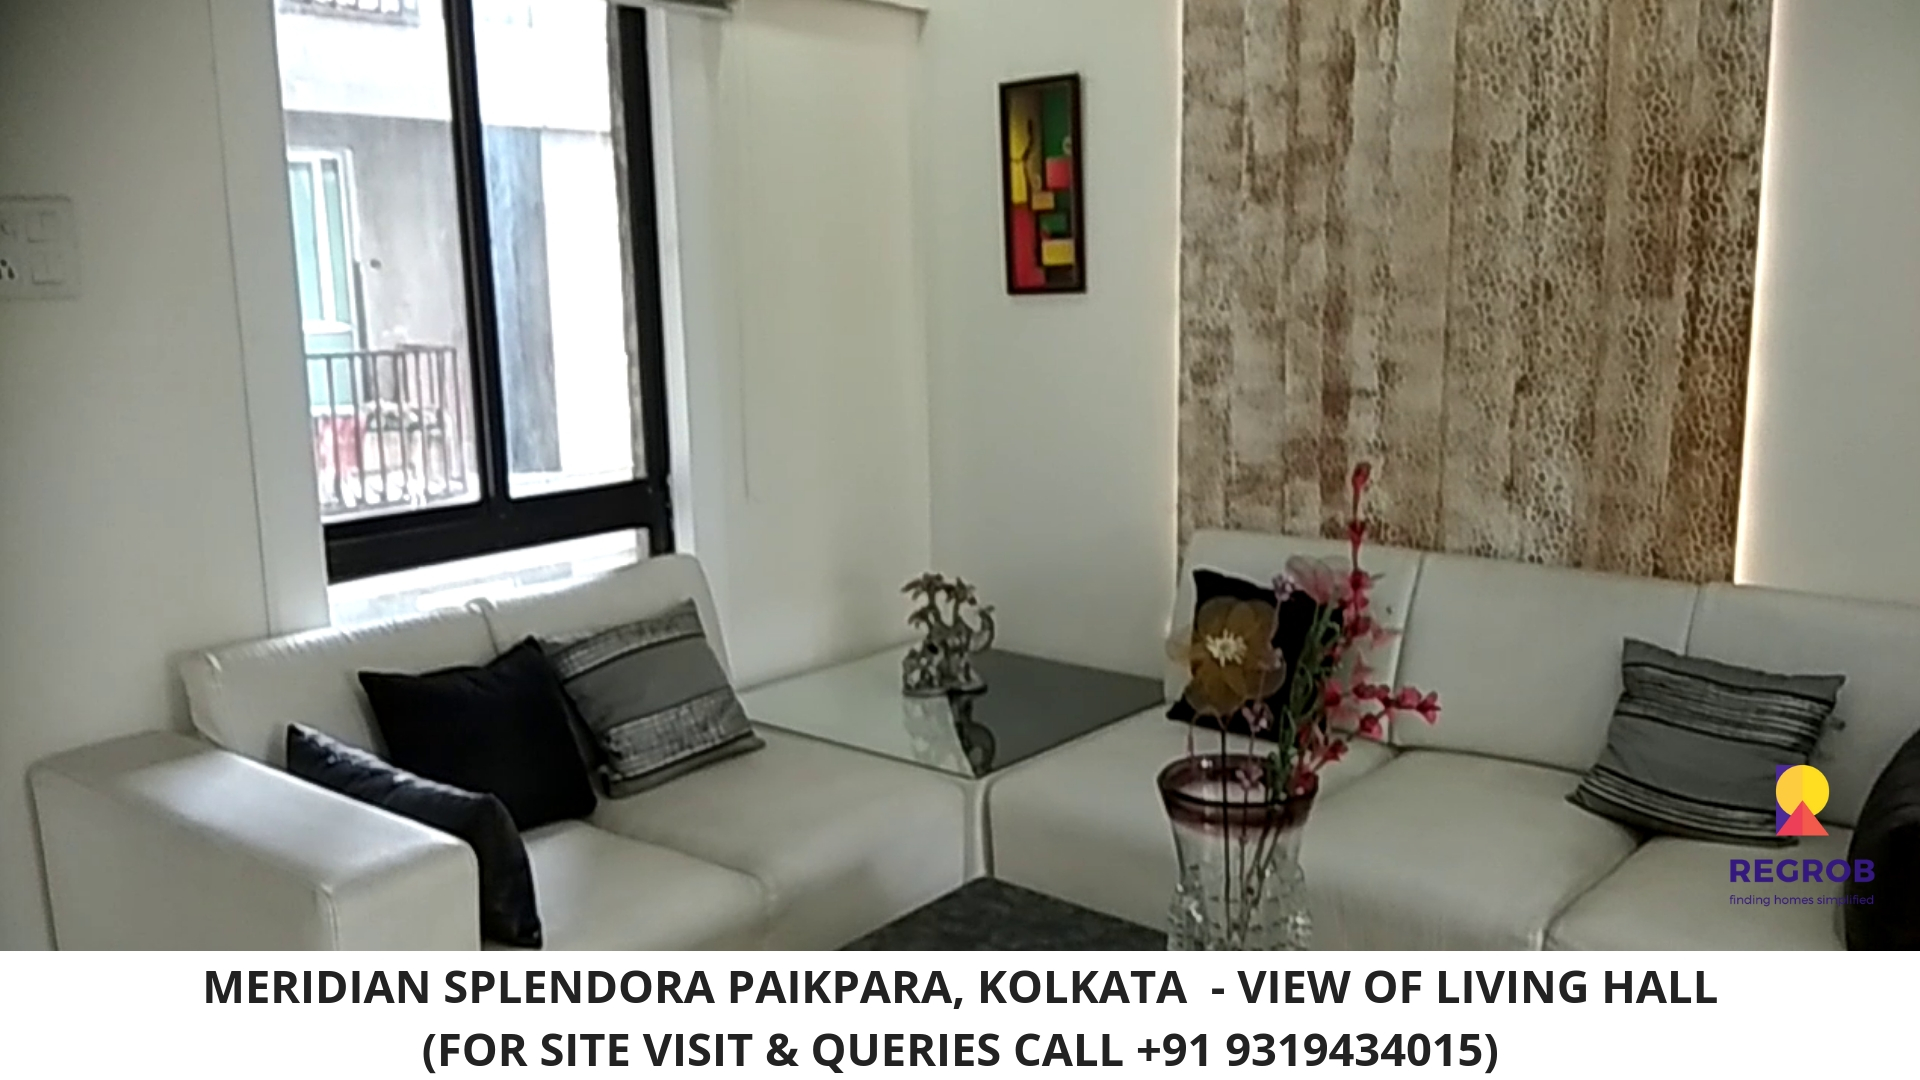 Meridian Splendora Paikpara Kolkata